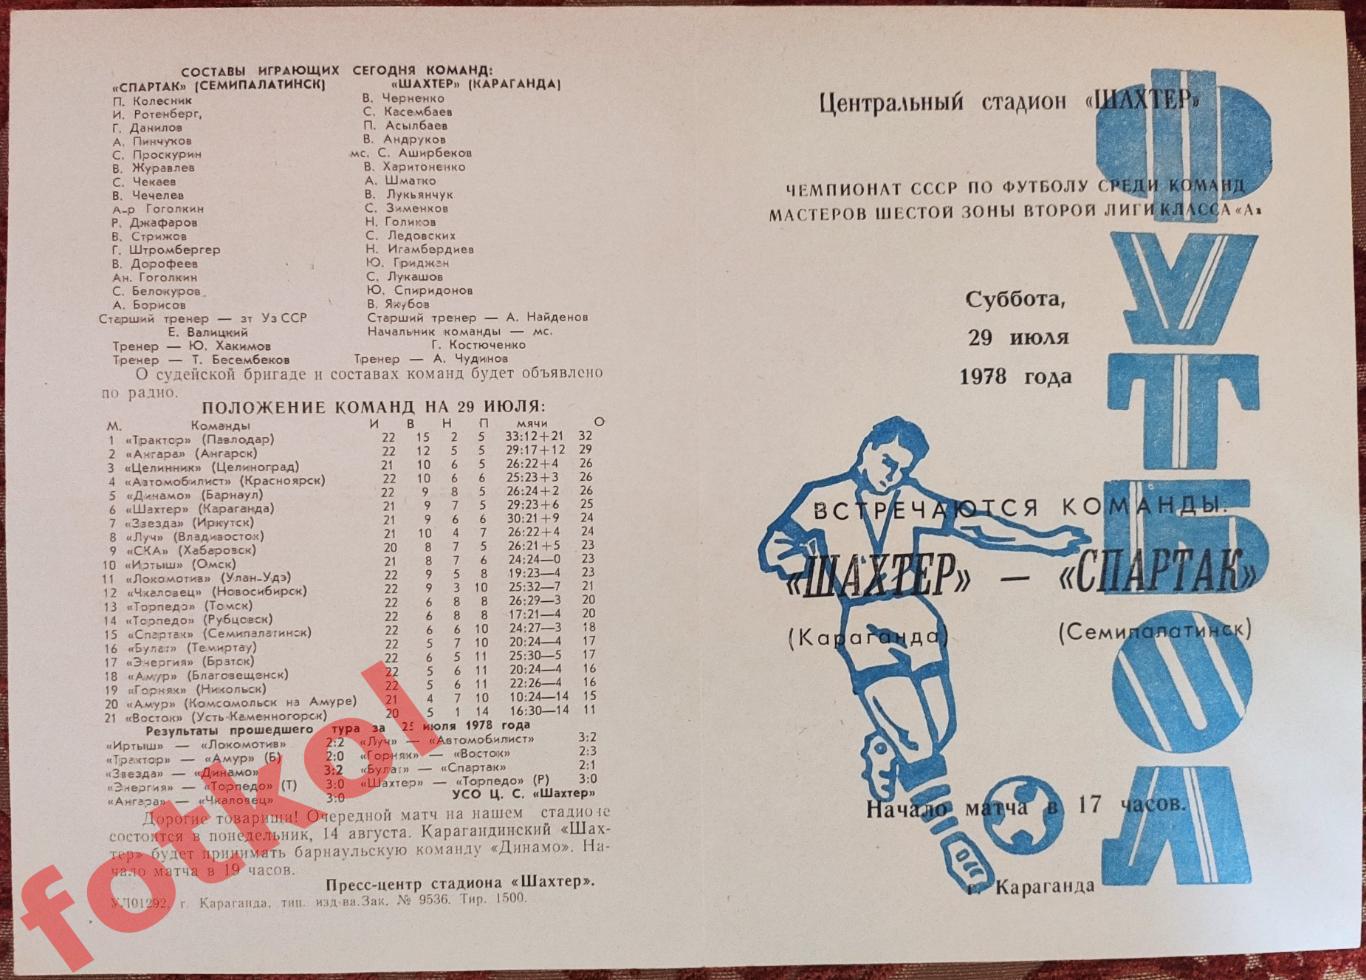 ШАХТЕР Караганда - СПАРТАК Семипалатинск 29.07.1978